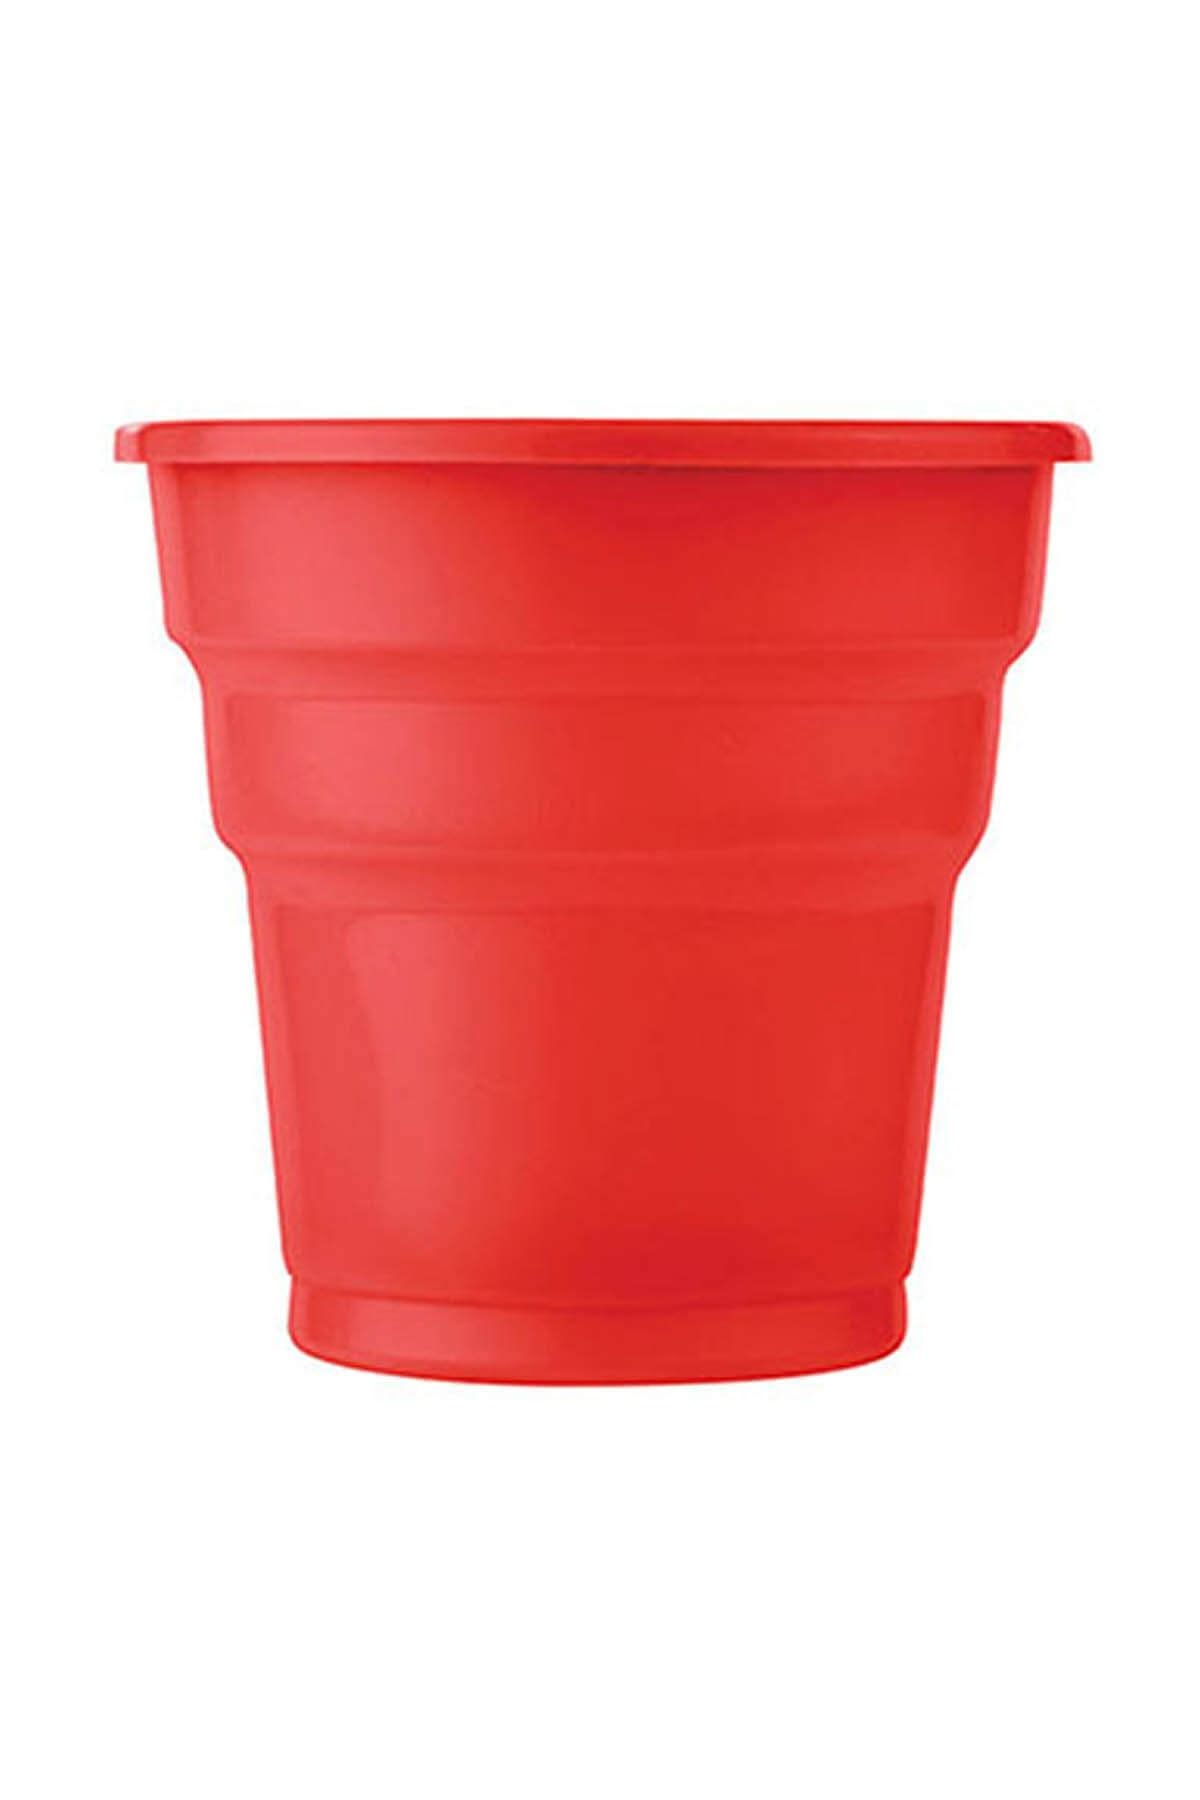 KullanAt Market Kırmızı Plastik Meşrubat Bardağı